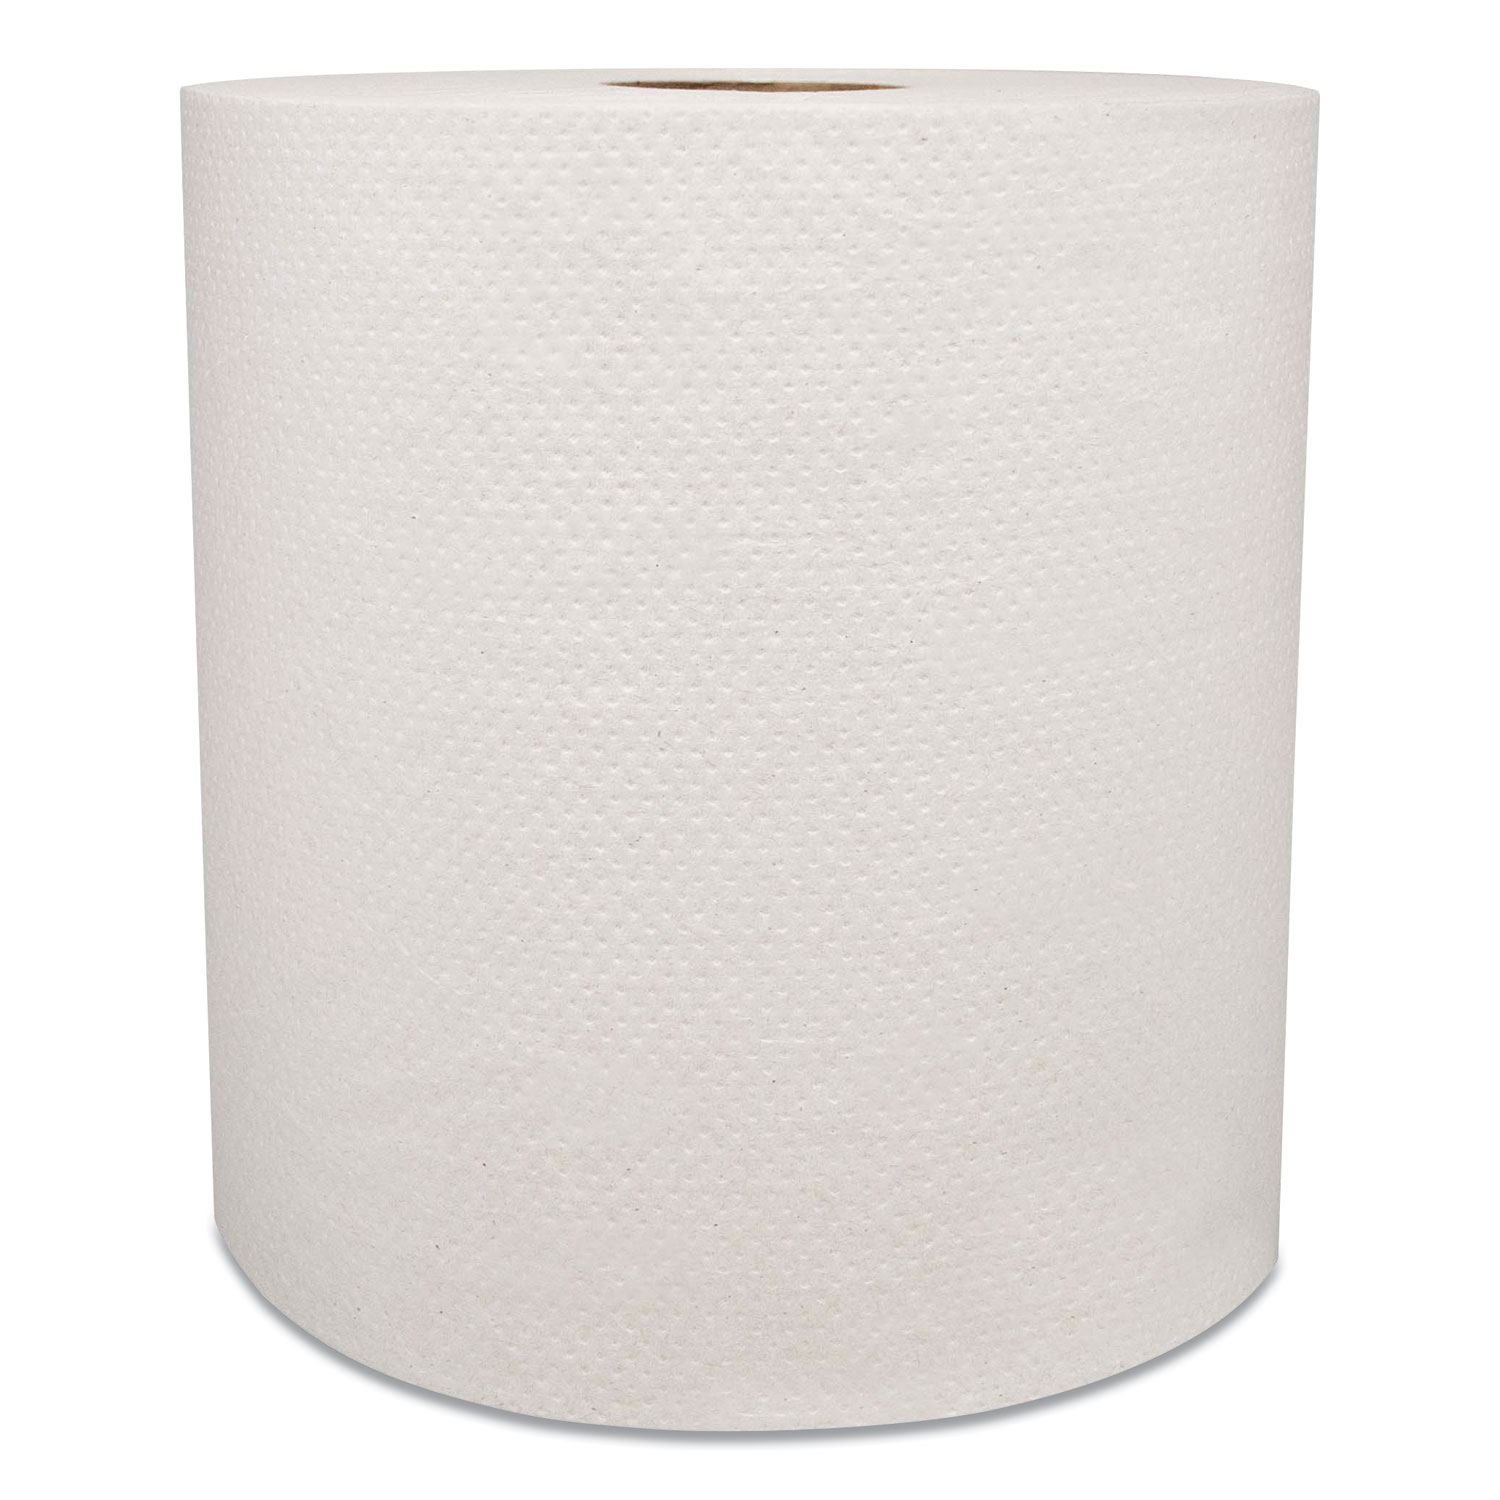  Morcon Tissue MOR W6800 Morsoft Universal Roll Towels, 8 x 800 ft, White, 6 Rolls/Carton (MORW6800) 